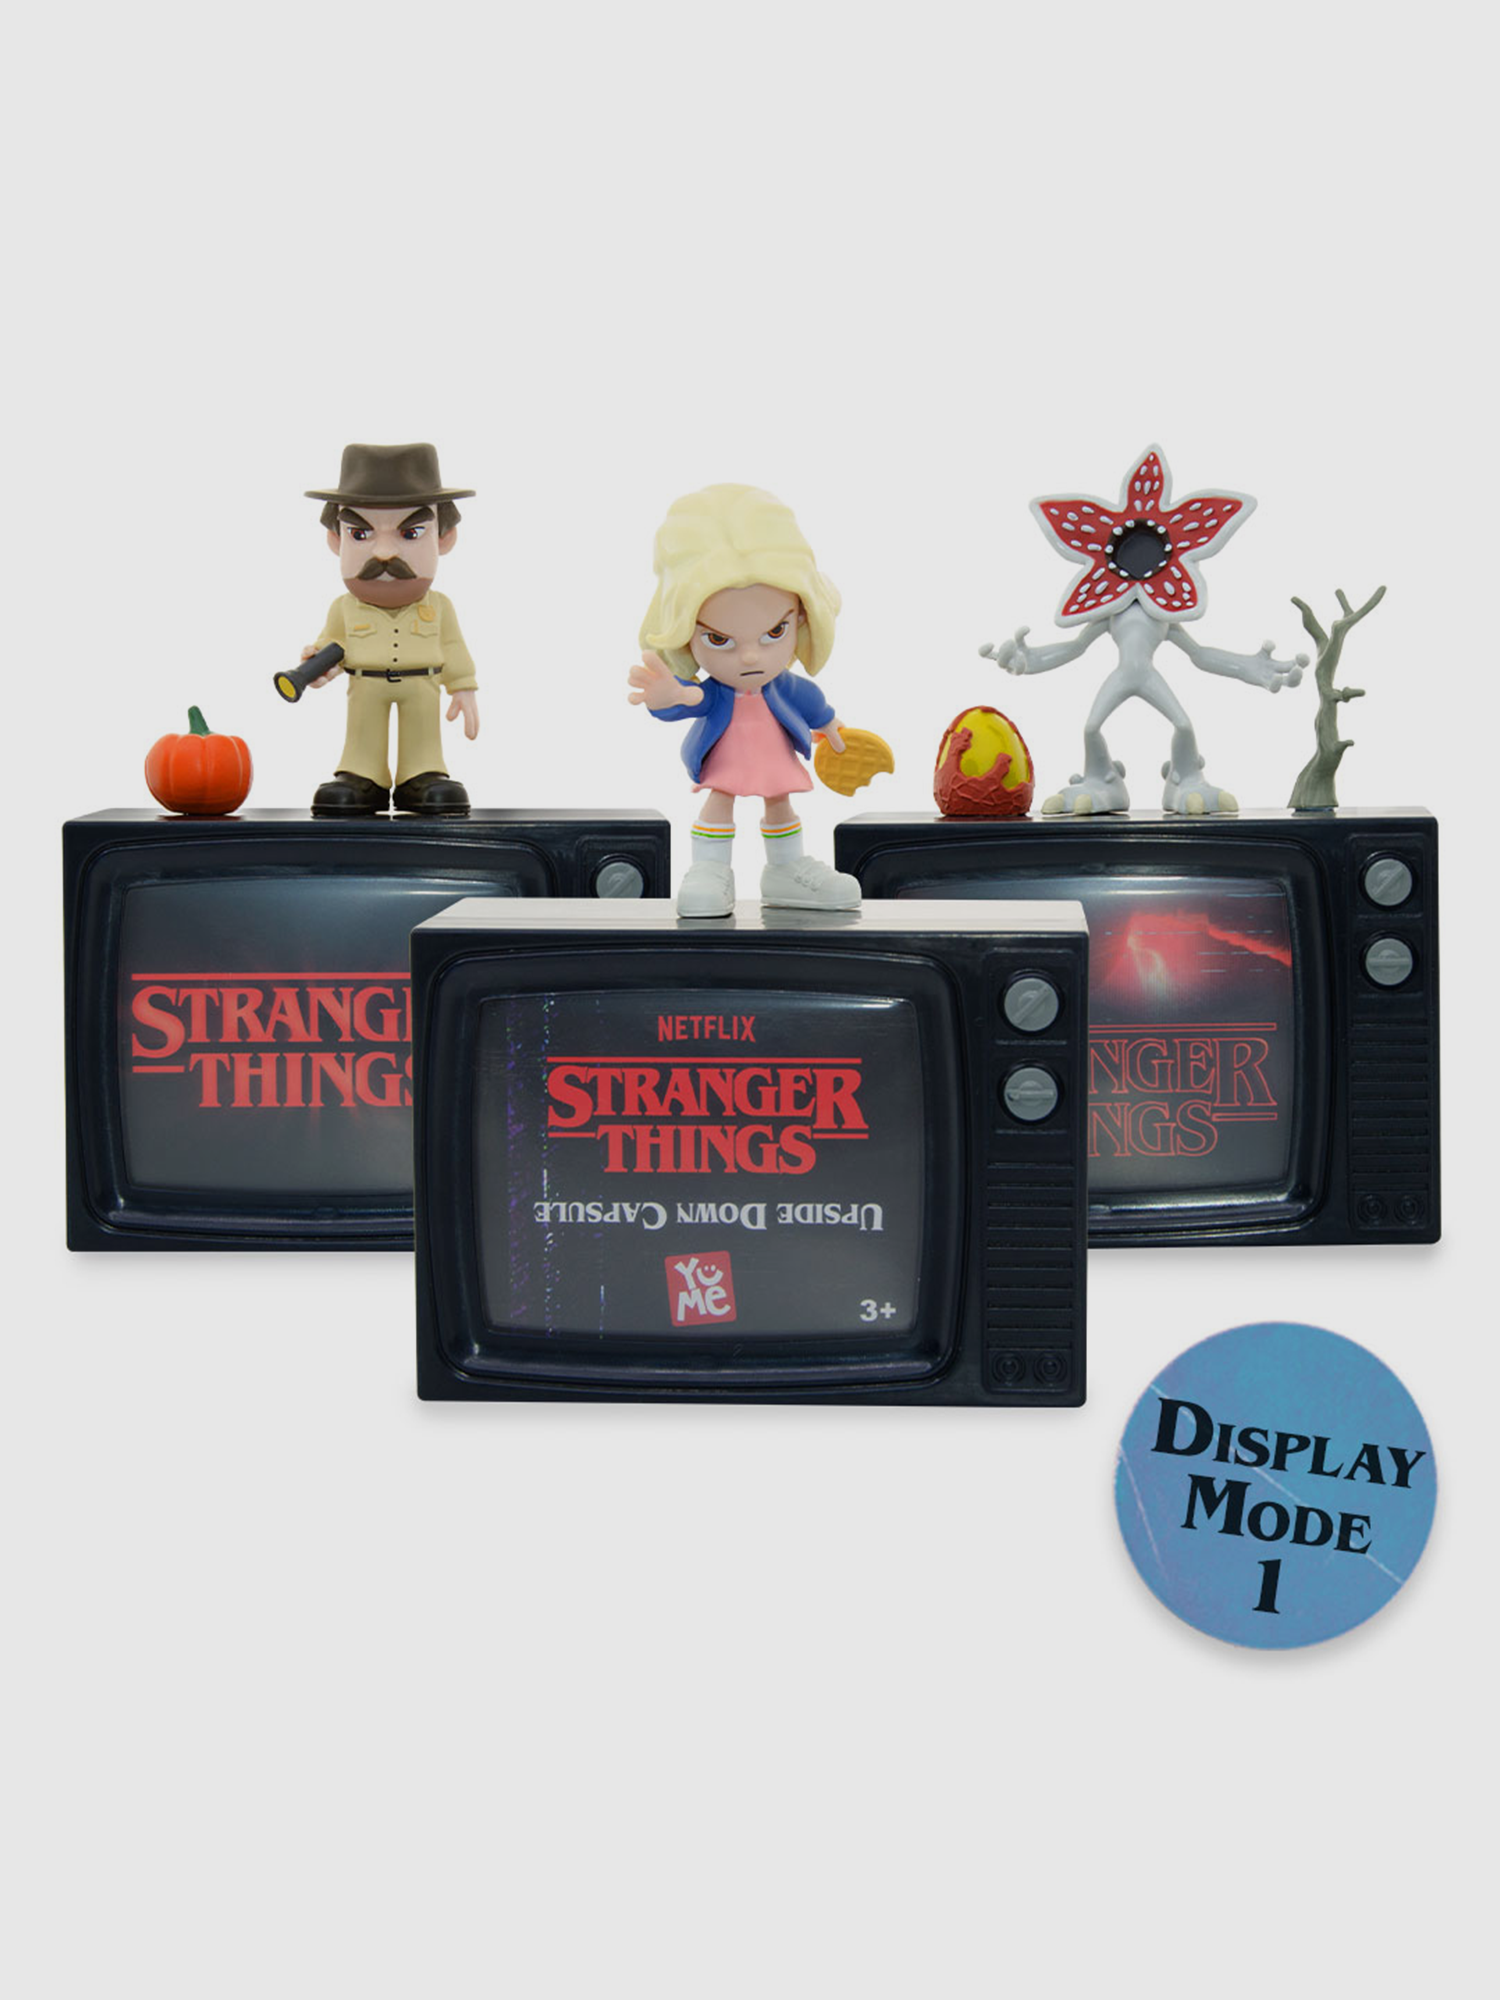 Stranger Things , T-shirt Stranger Things, Season 2 Television show  Netflix, stranger transparent background PNG clipart